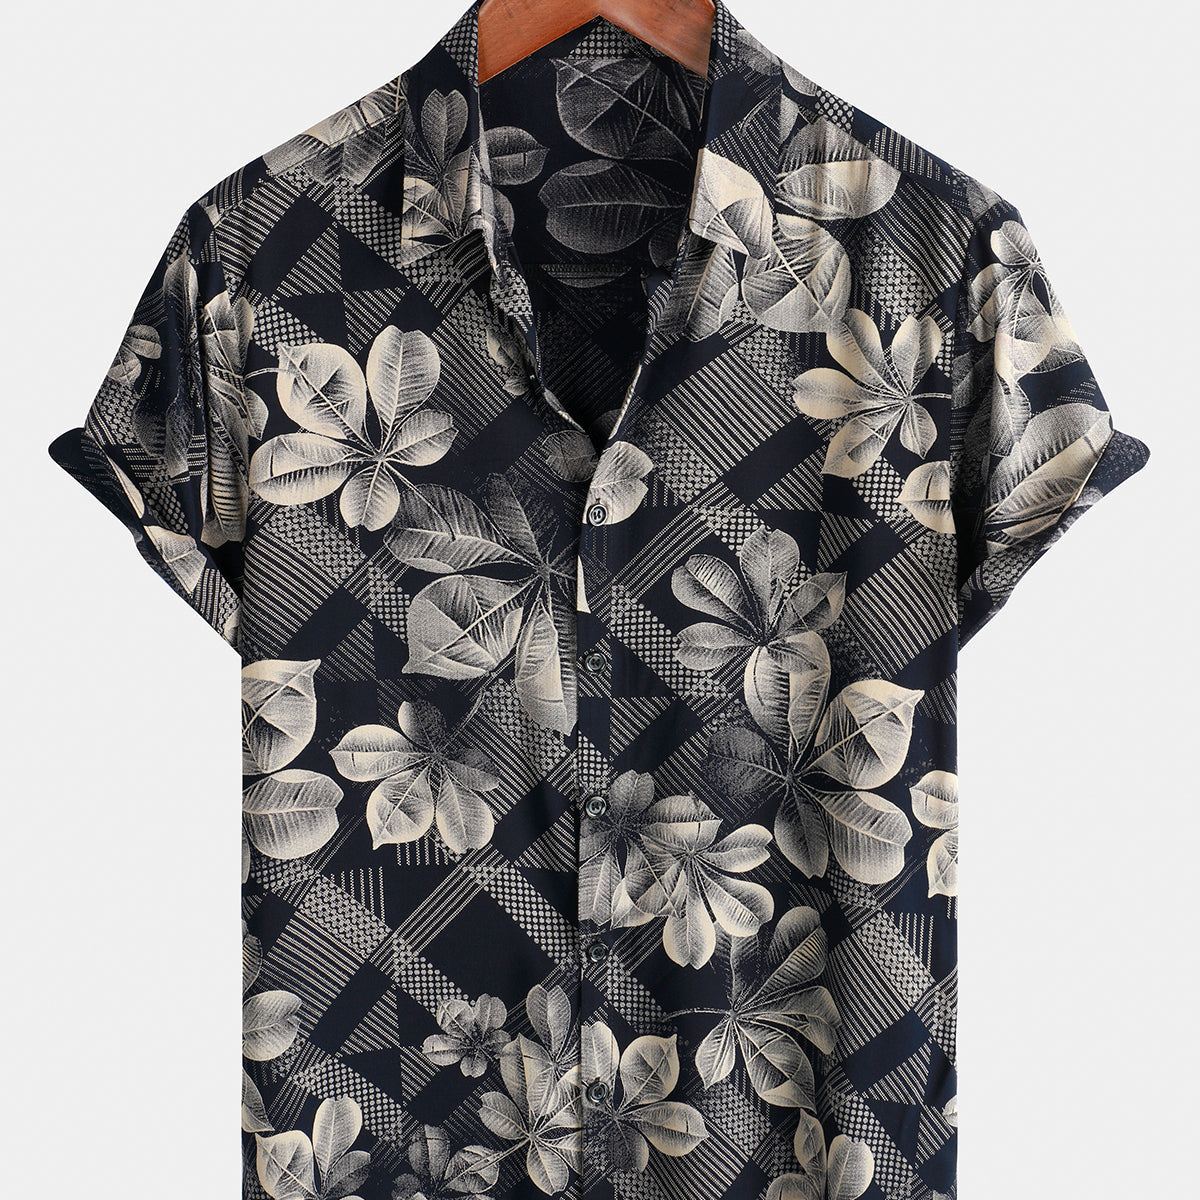 Men's Vintage Print Floral Cotton Retro Checked Argyle Holiday Short Sleeve Button Up Shirt